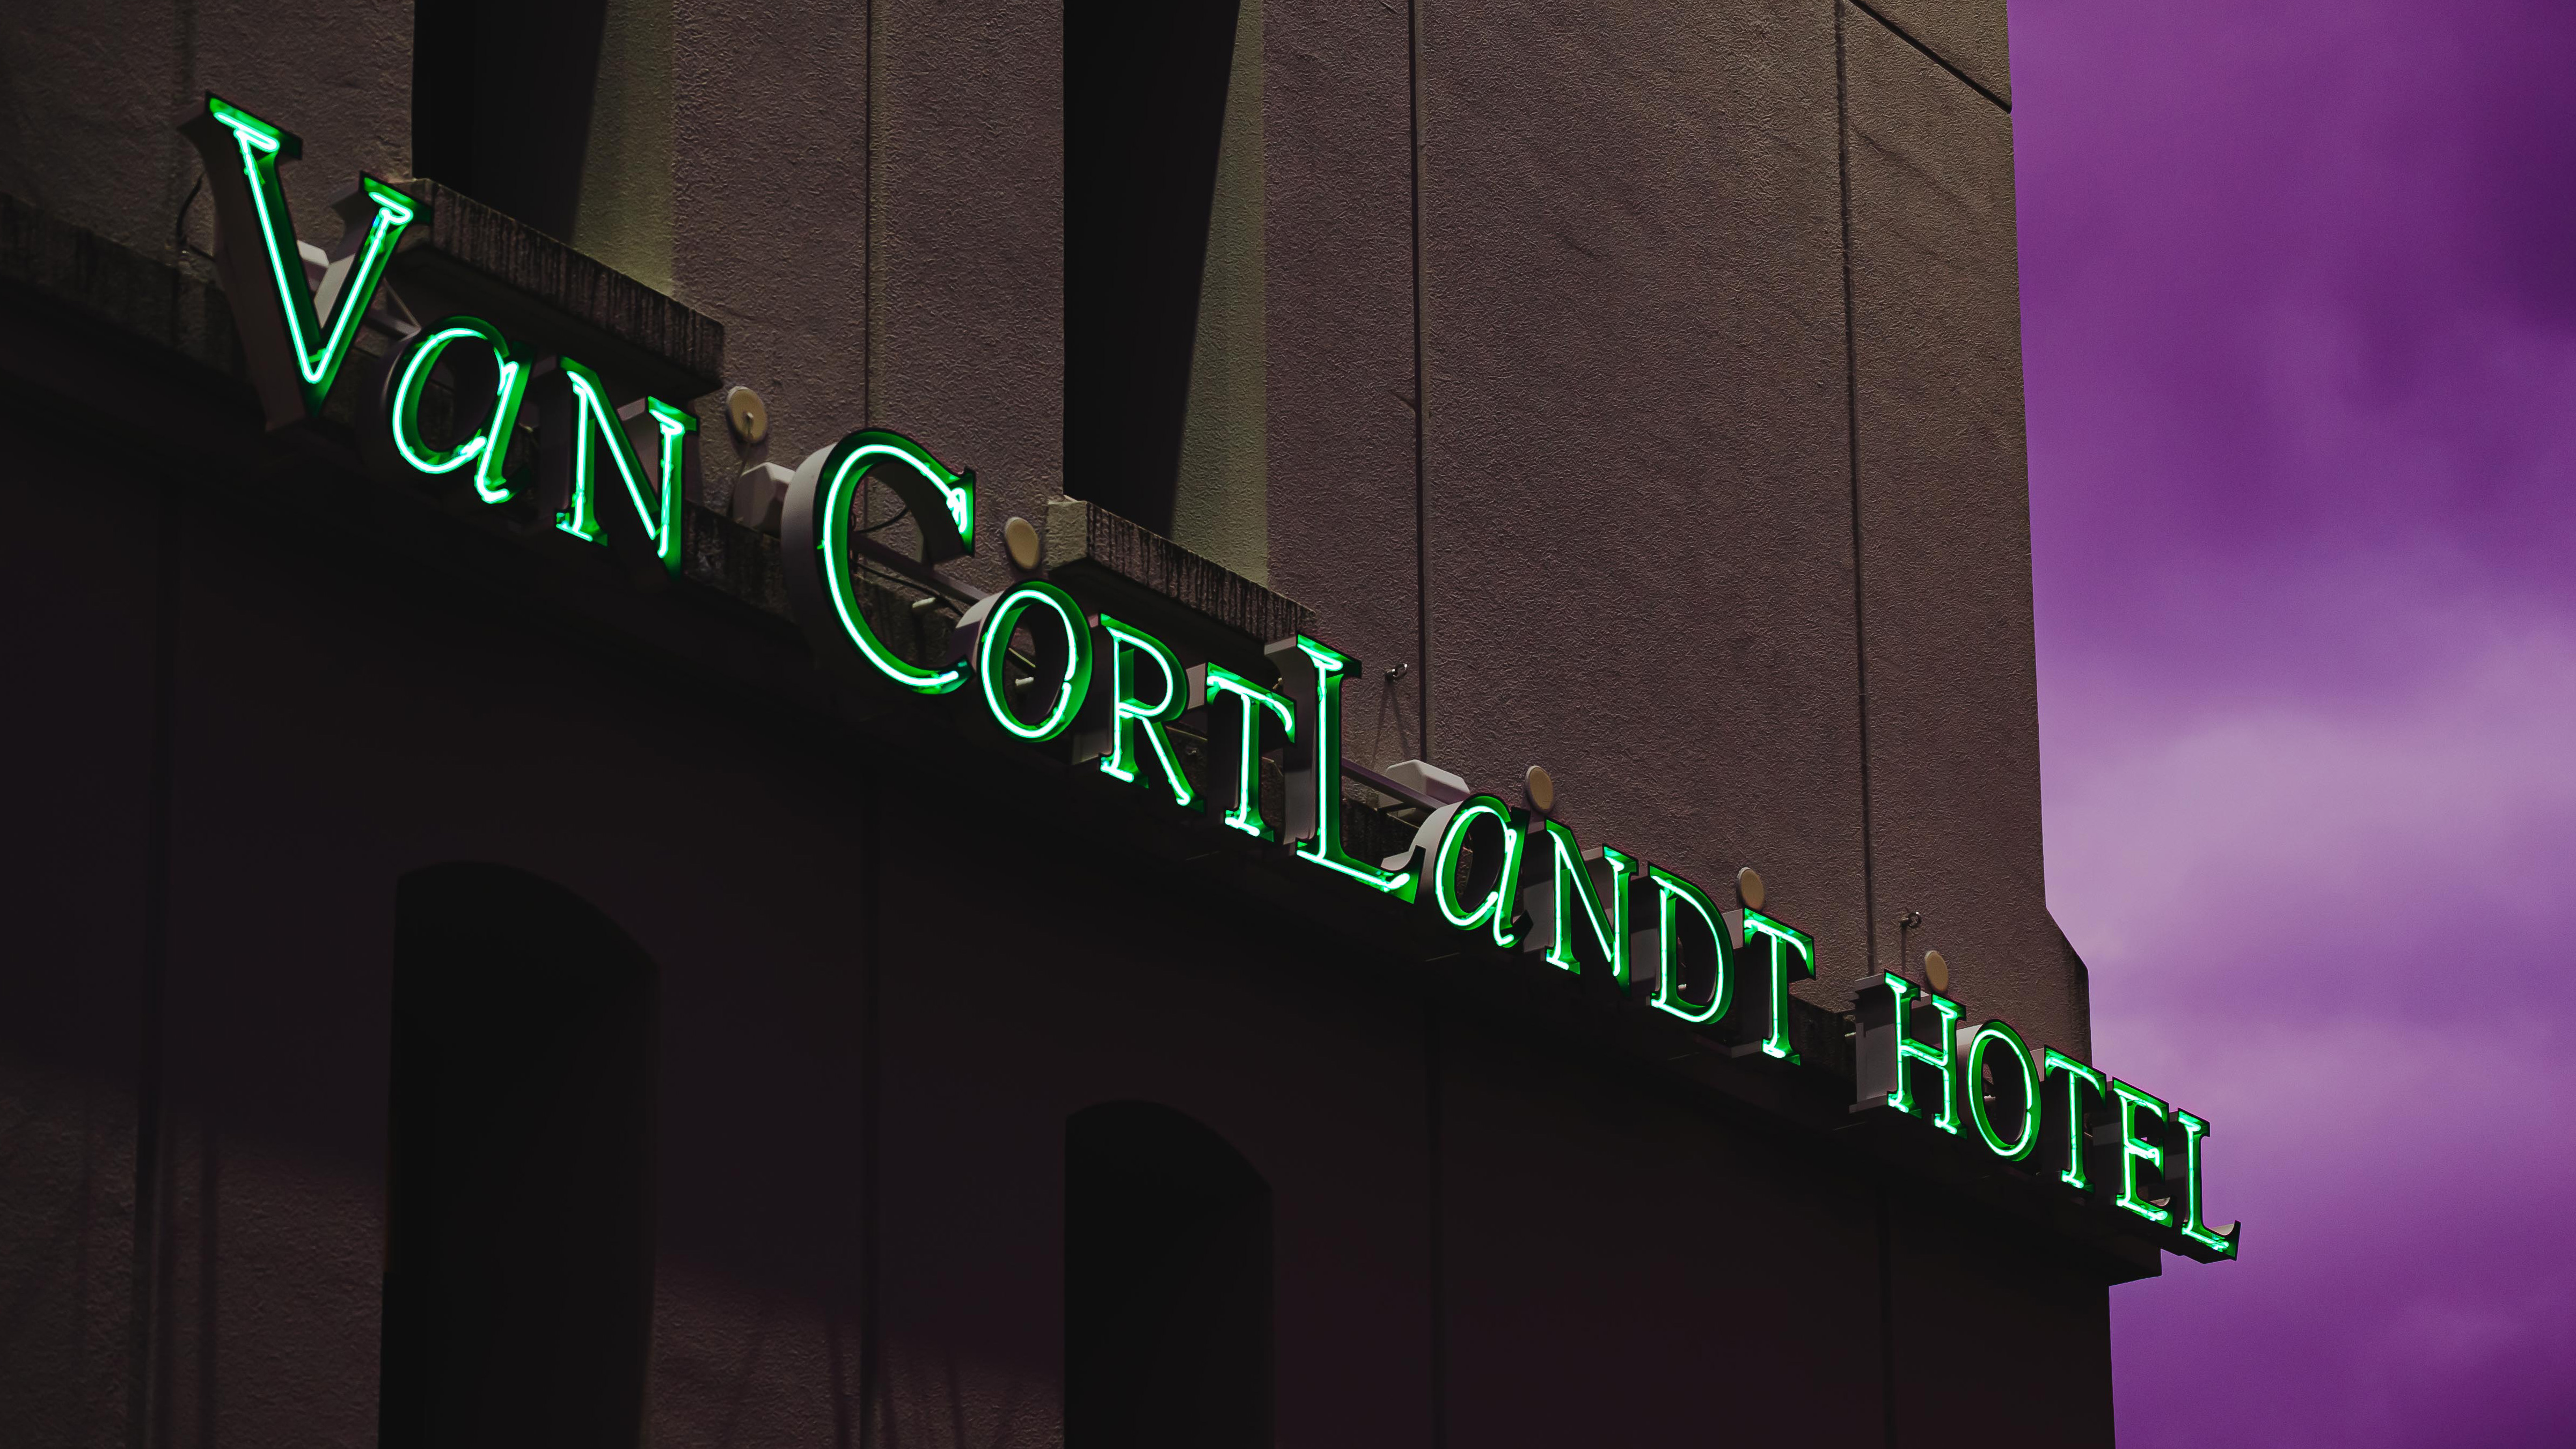 Van Cortlandt Hotel